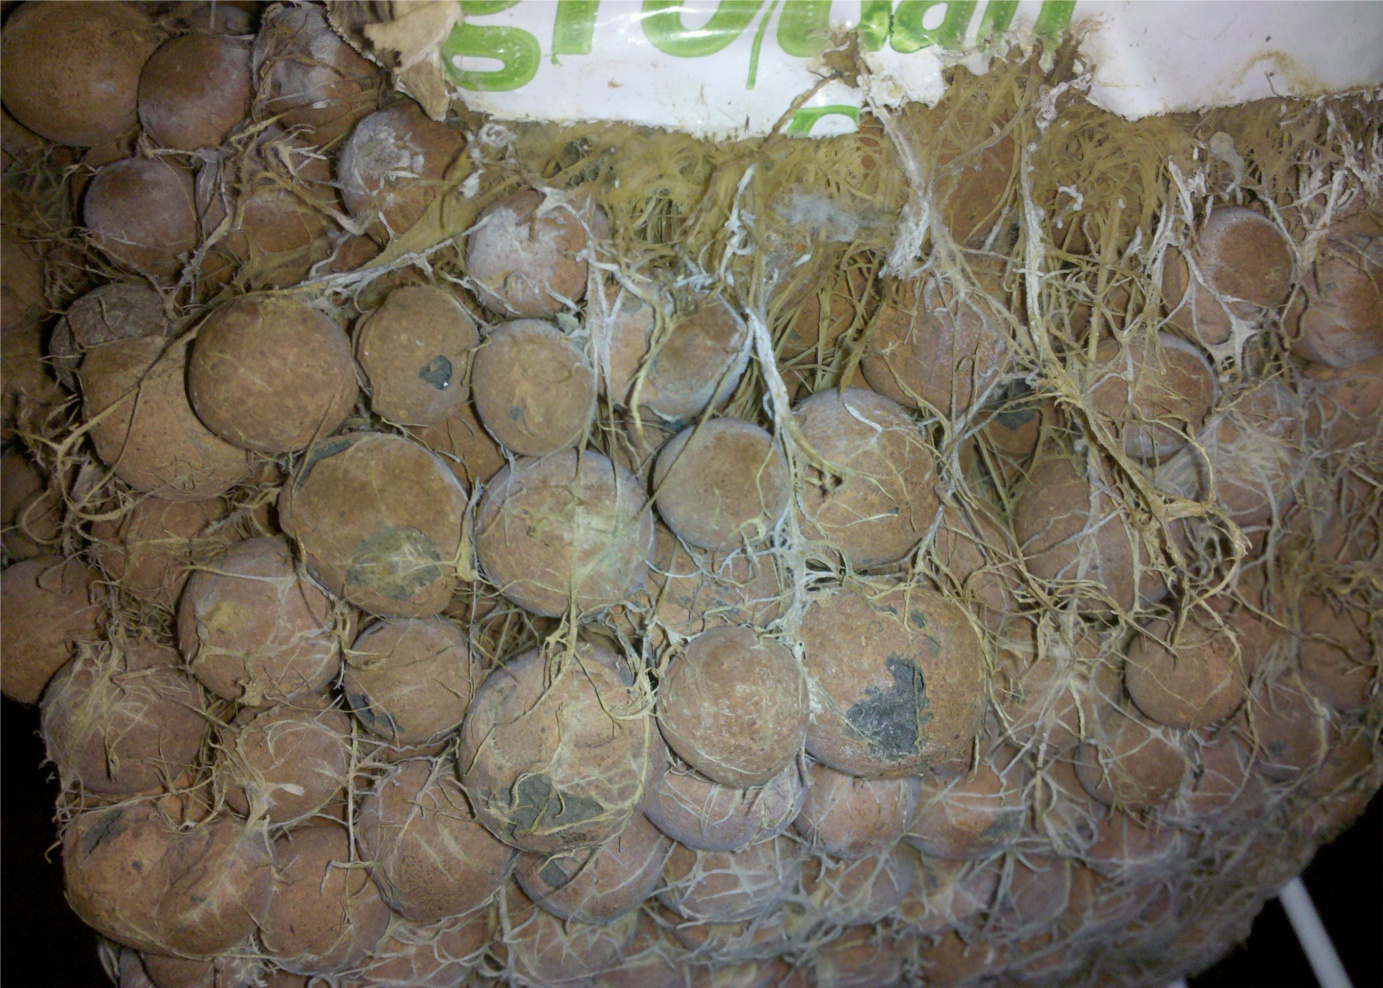 ... Rootball 300x214 Good Hydroponic Growing Medium: Hydroton Clay Pebbles